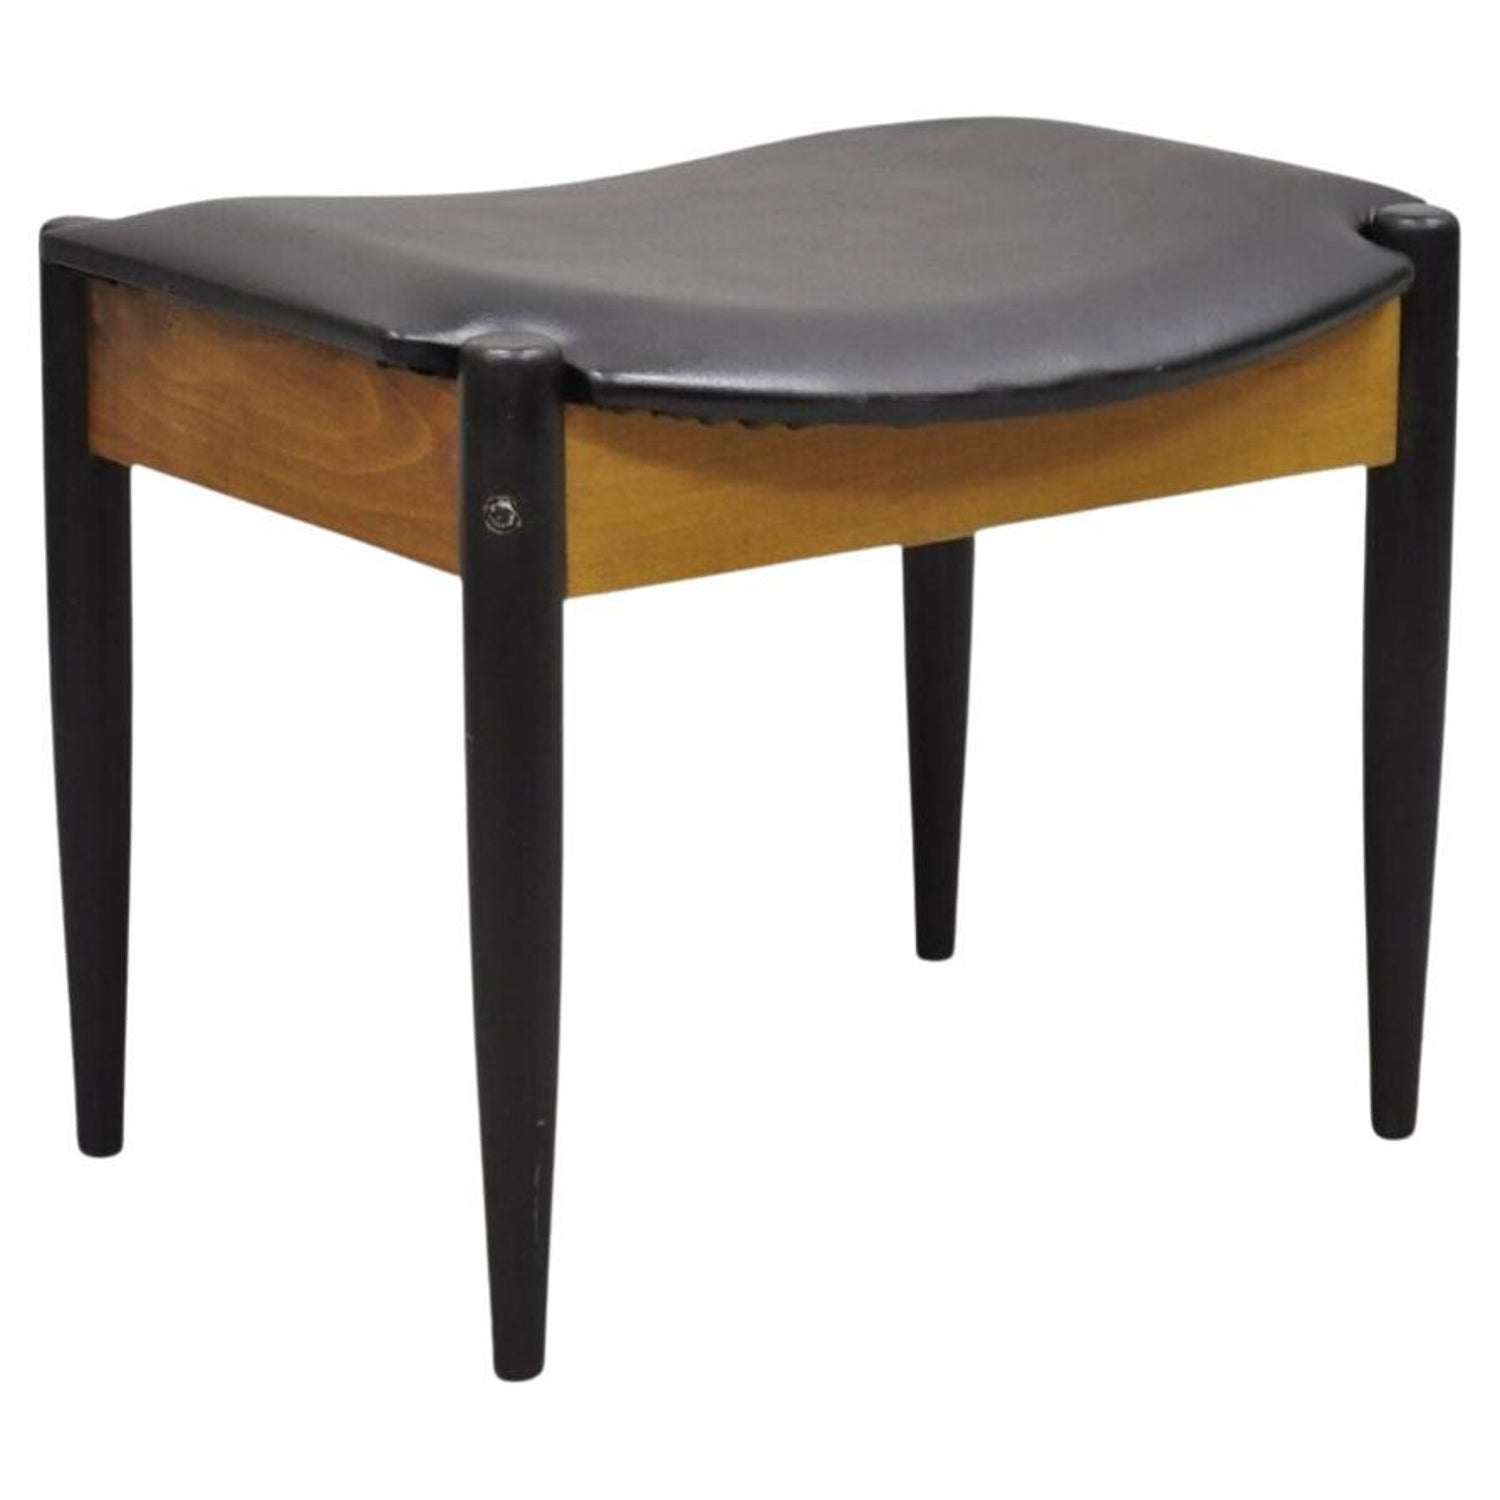 https://a.1stdibscdn.com/norco-mid-century-modern-sculpted-footstool-ottoman-tapered-leg-black-vinyl-seat-for-sale/f_9341/f_376408321702998821451/f_37640832_1702998821752_bg_processed.jpg?width=1500